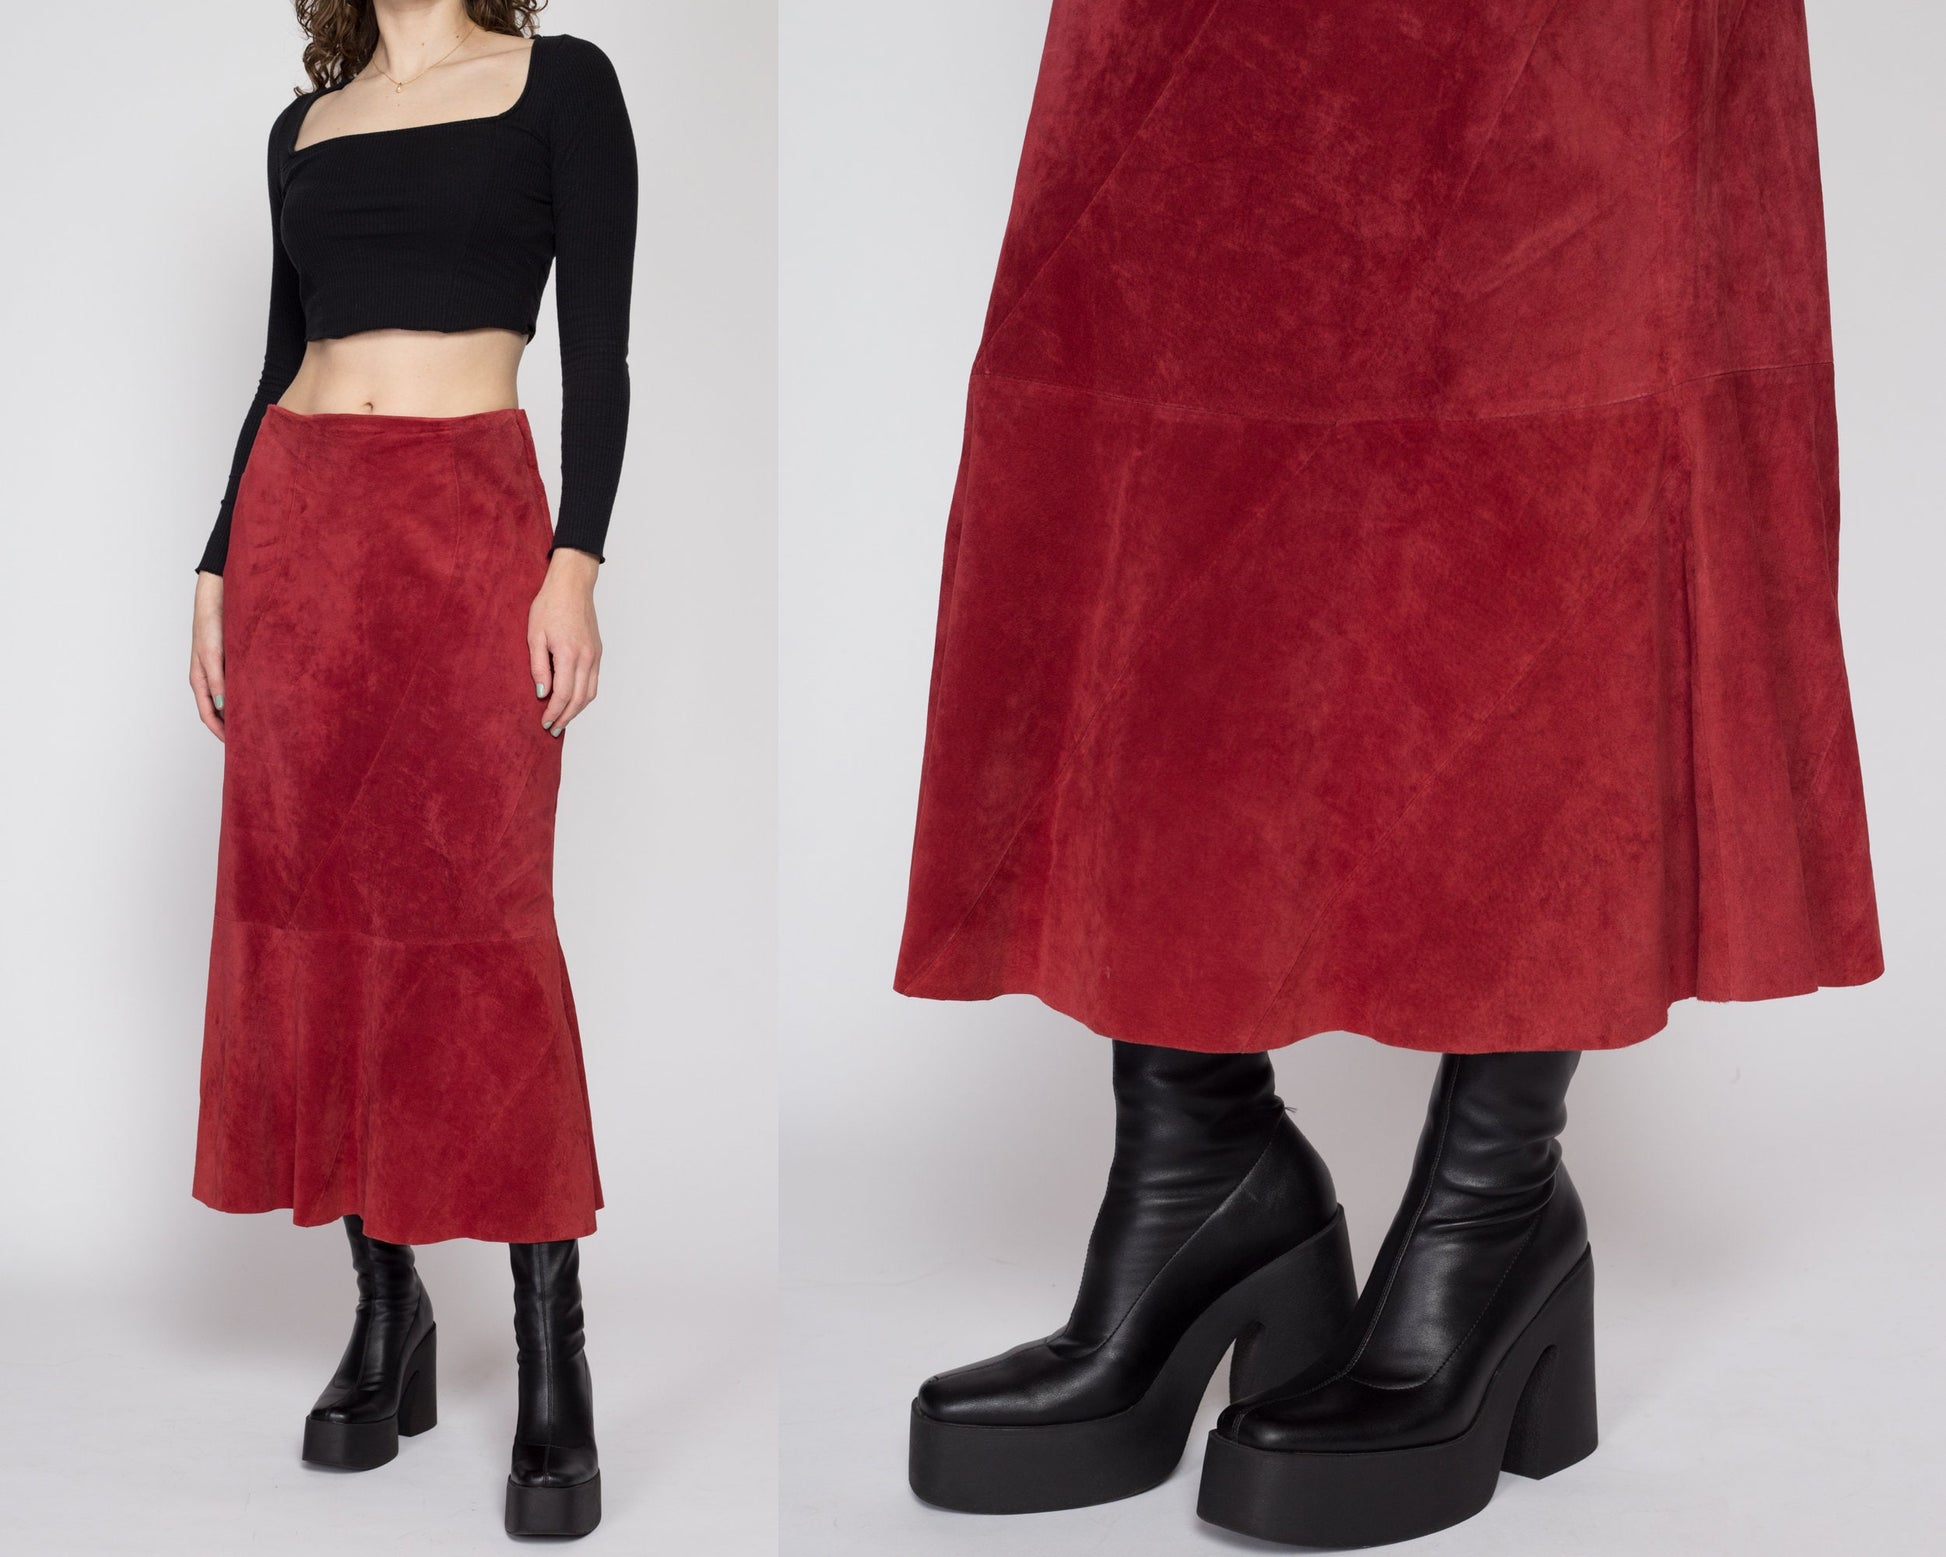 Medium 90s Boho Raspberry Red Suede Midi Skirt | Vintage High Waisted A Line Mermaid Skirt